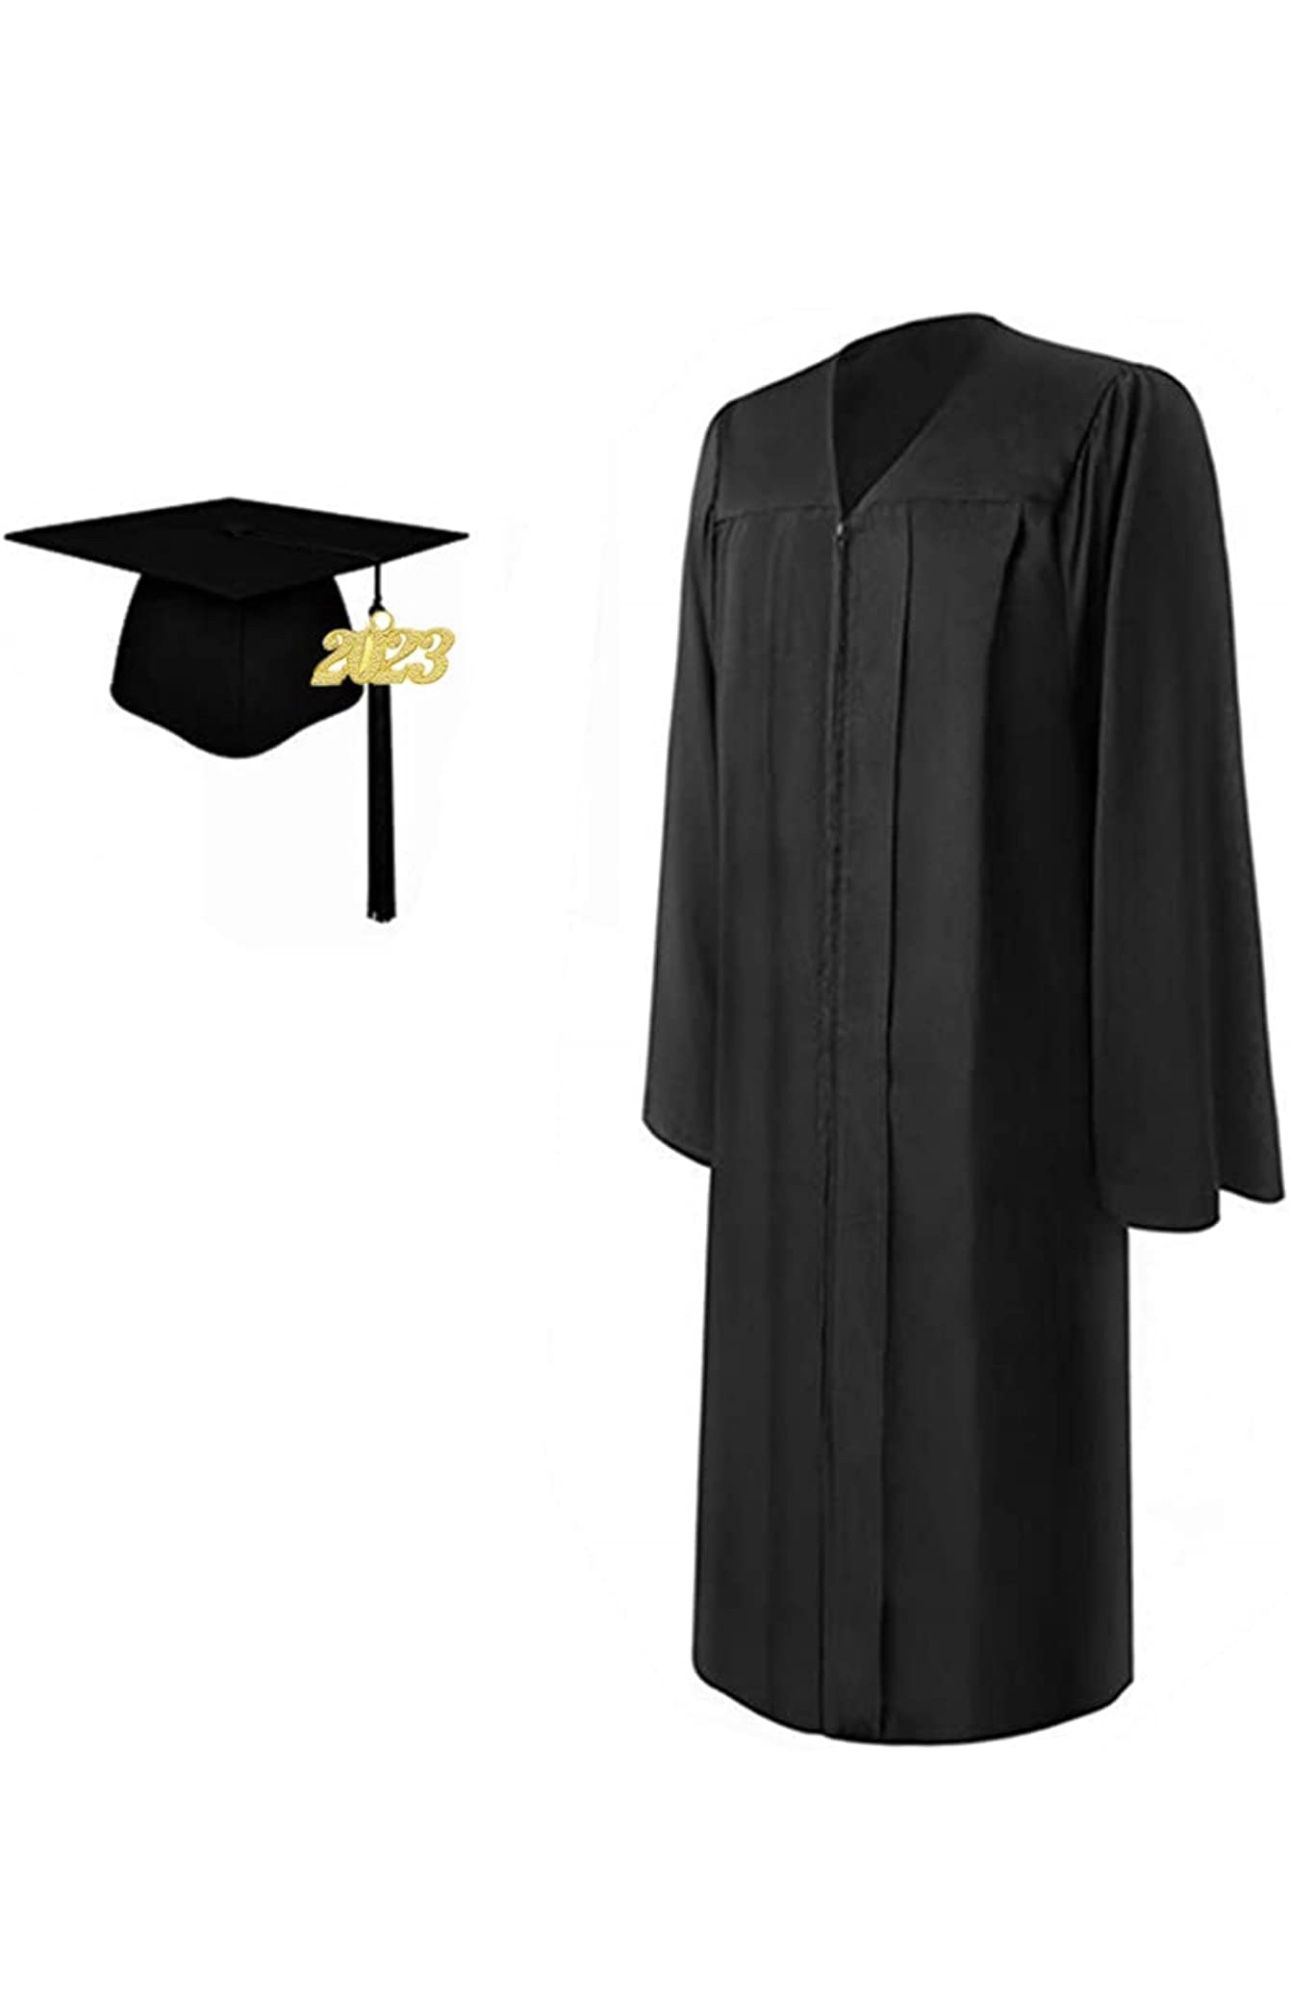 Graduation Cap And Gown - Black 